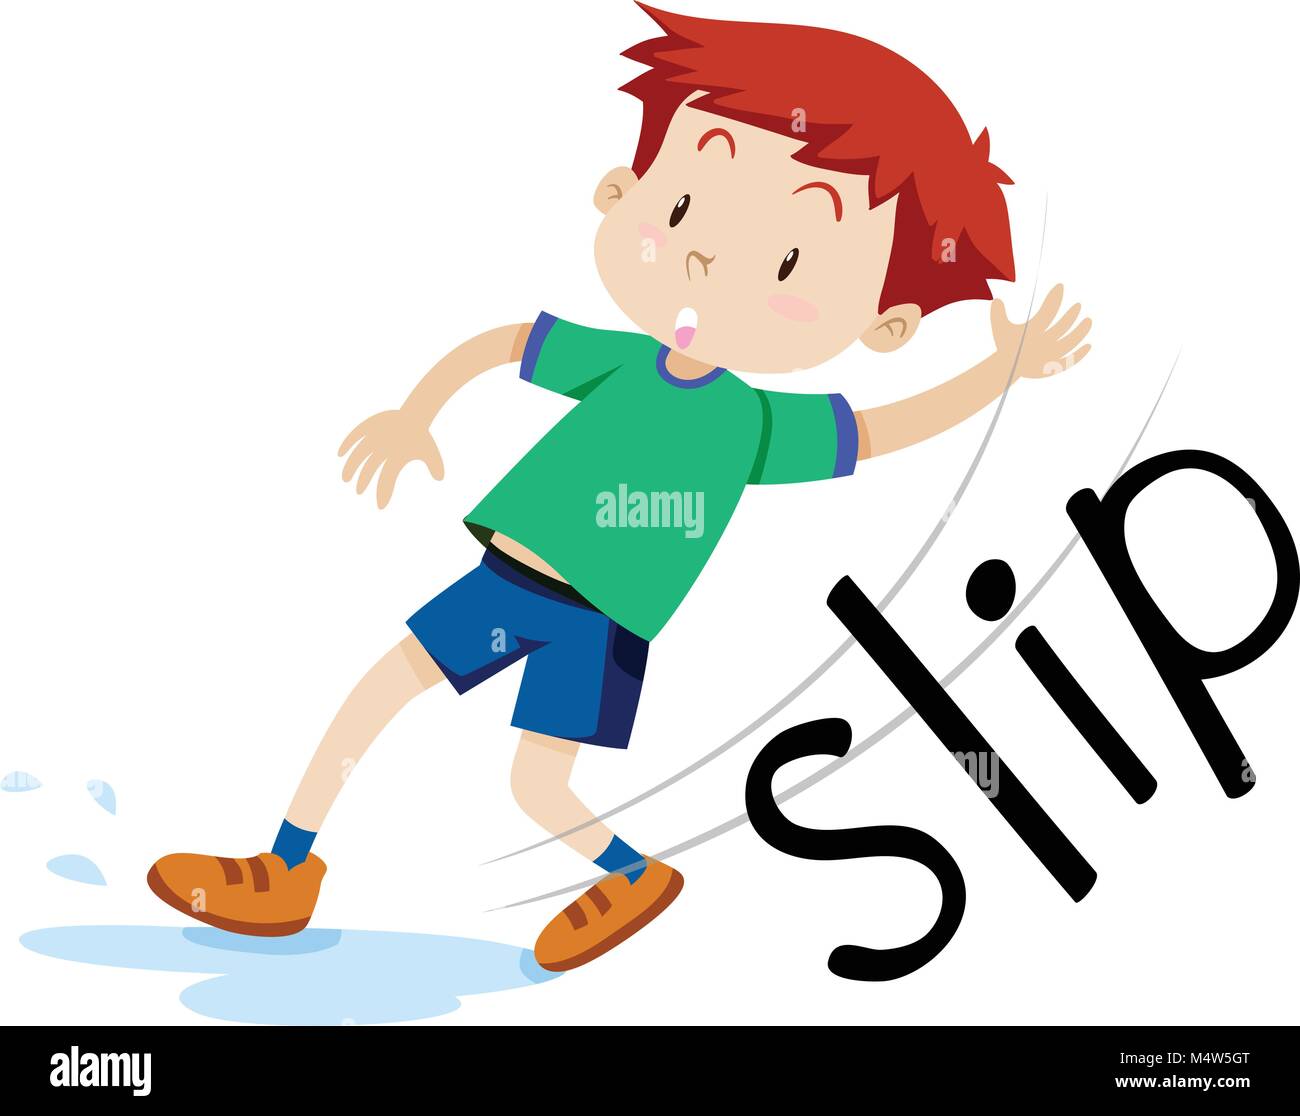 Boy slipping on the wet floor illustration Stock Vector Image & Art - Alamy